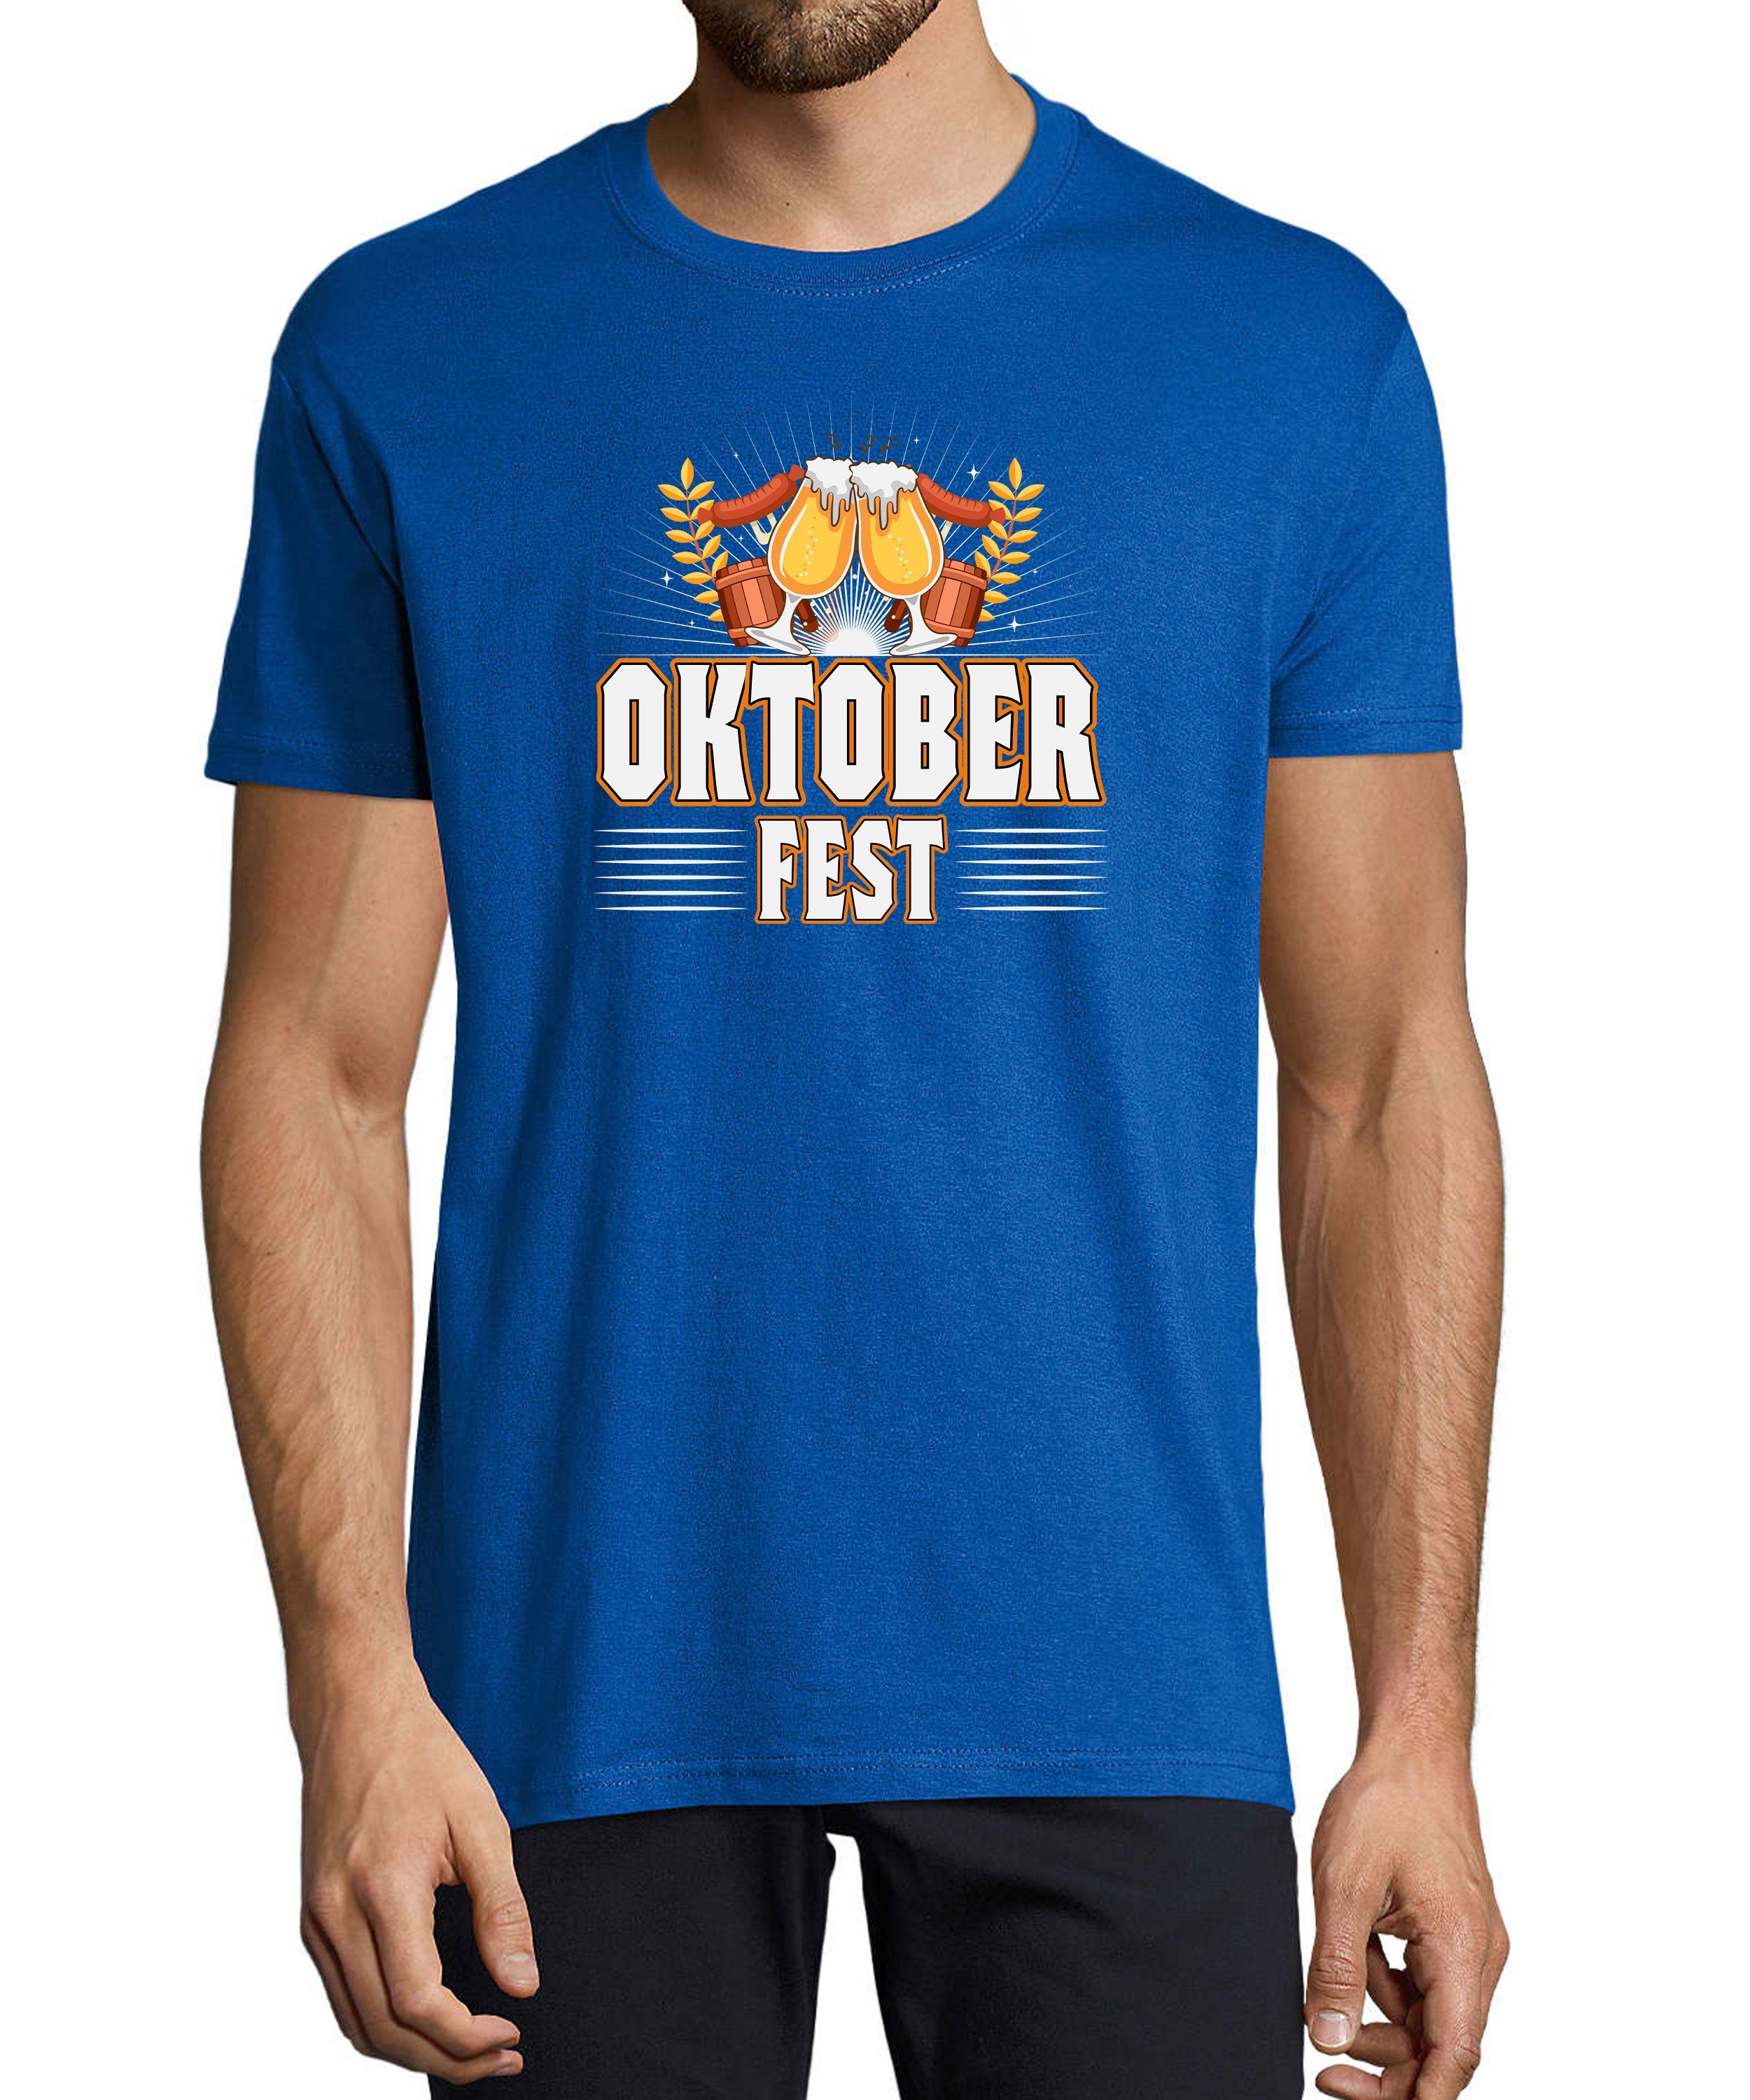 MyDesign24 T-Shirt Herren Party Shirt - Oktoberfest T-Shirt Baumwollshirt mit Aufdruck Regular Fit, i327 royal blau